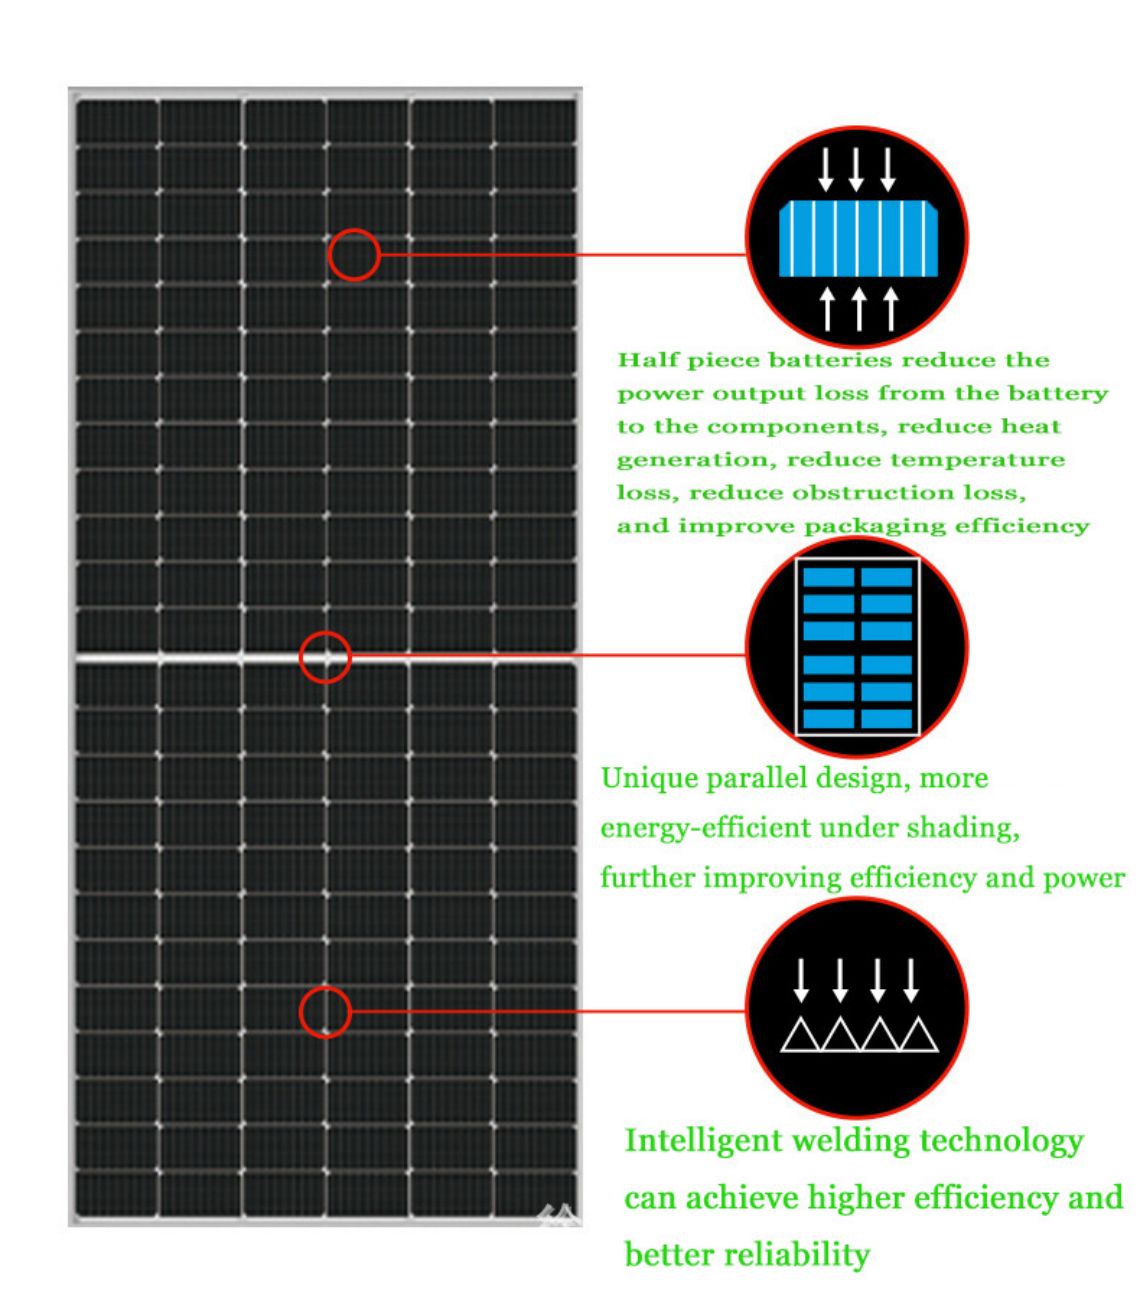 Mòduls PERC de doble cara de silici monocristal·lí solar